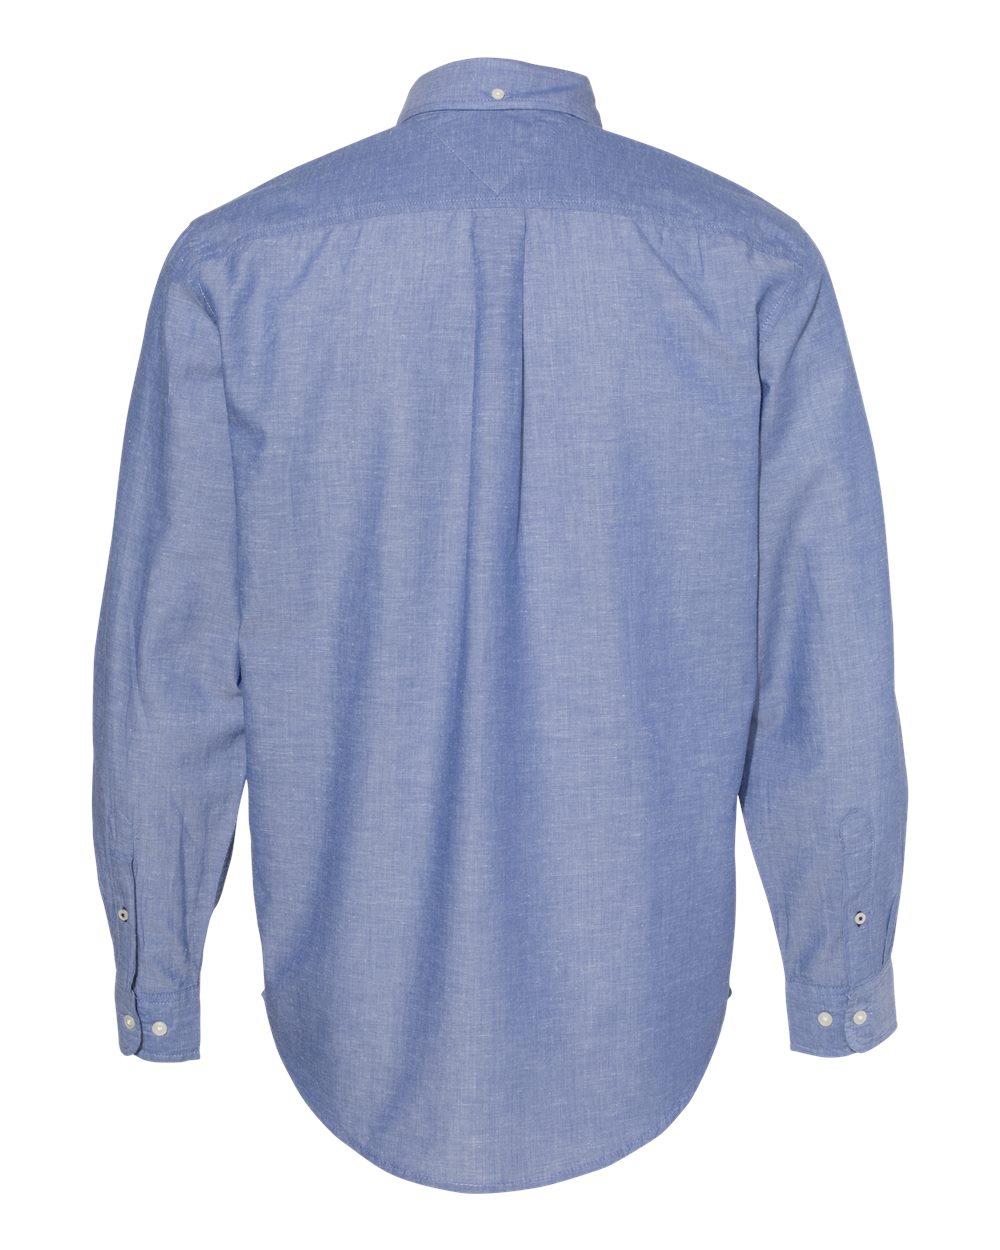 Tommy Hilfiger Cotton/Linen Shirt #13H1910 Mazarine Blue Back